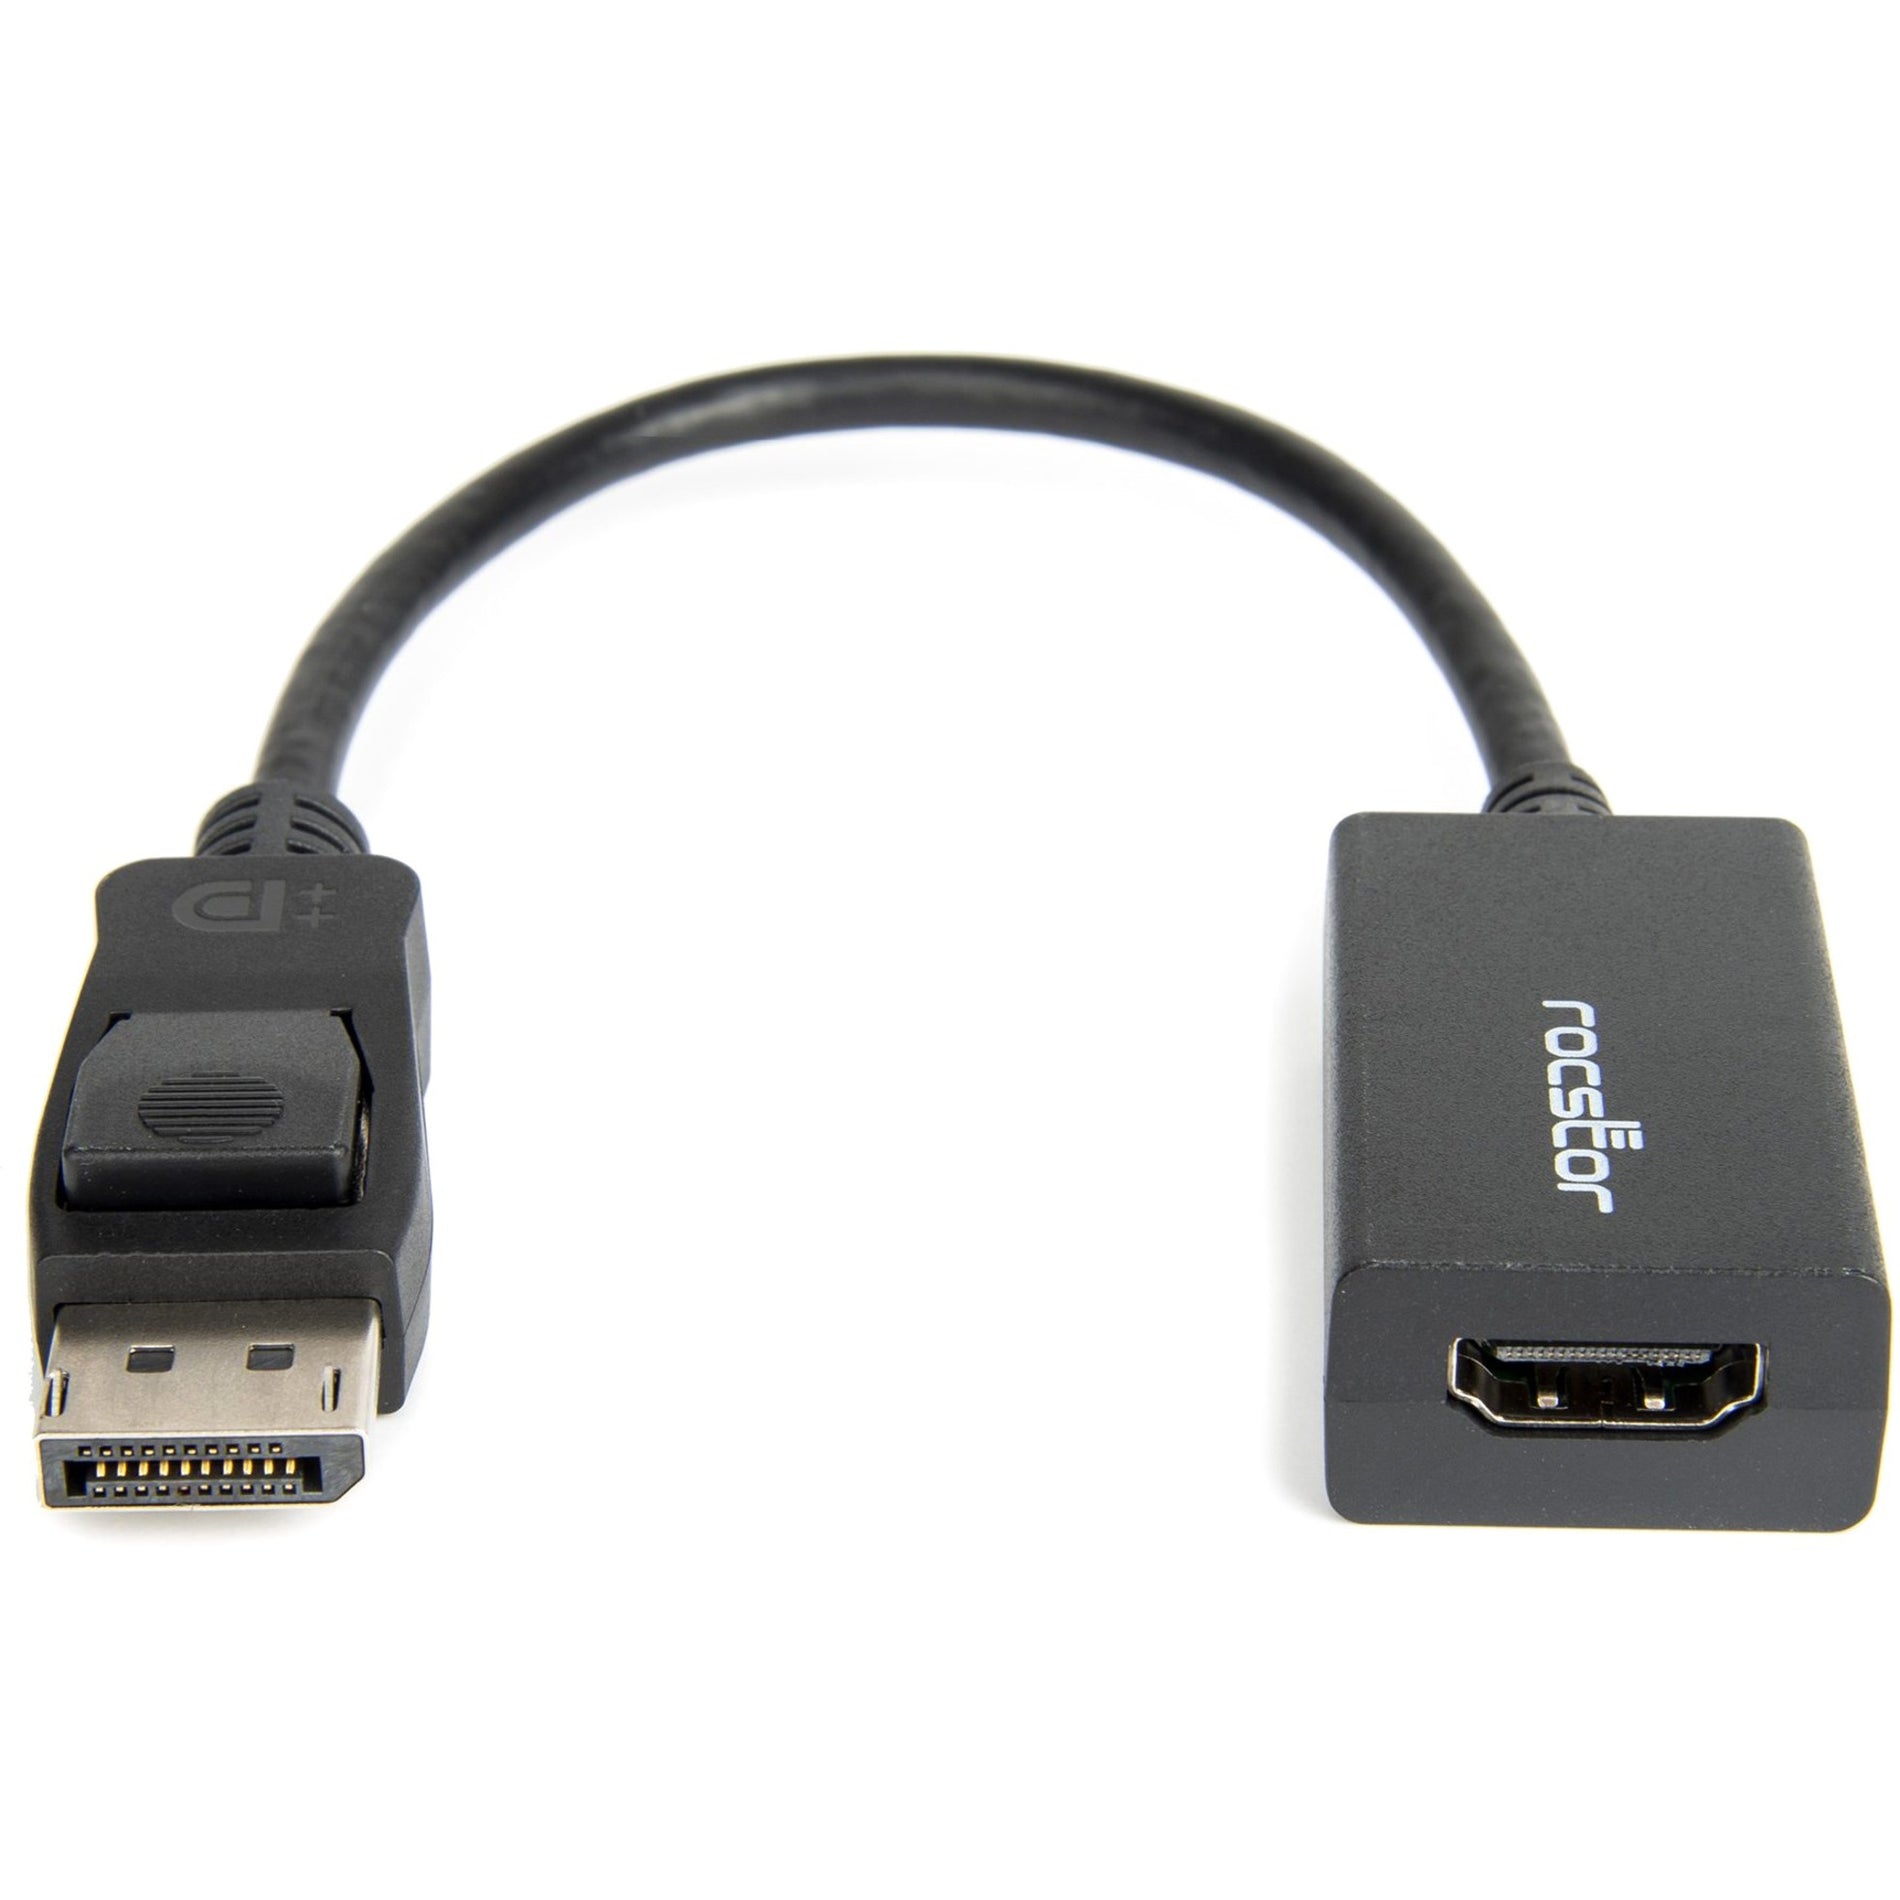 Rocstor Y10A101-B1 DisplayPort（男性）to HDMI（女性）アダプタコンバータ、1920 x 1200解像度対応。ブランド名：Rocstor。ROCSTORは、Rocstorと翻訳します。